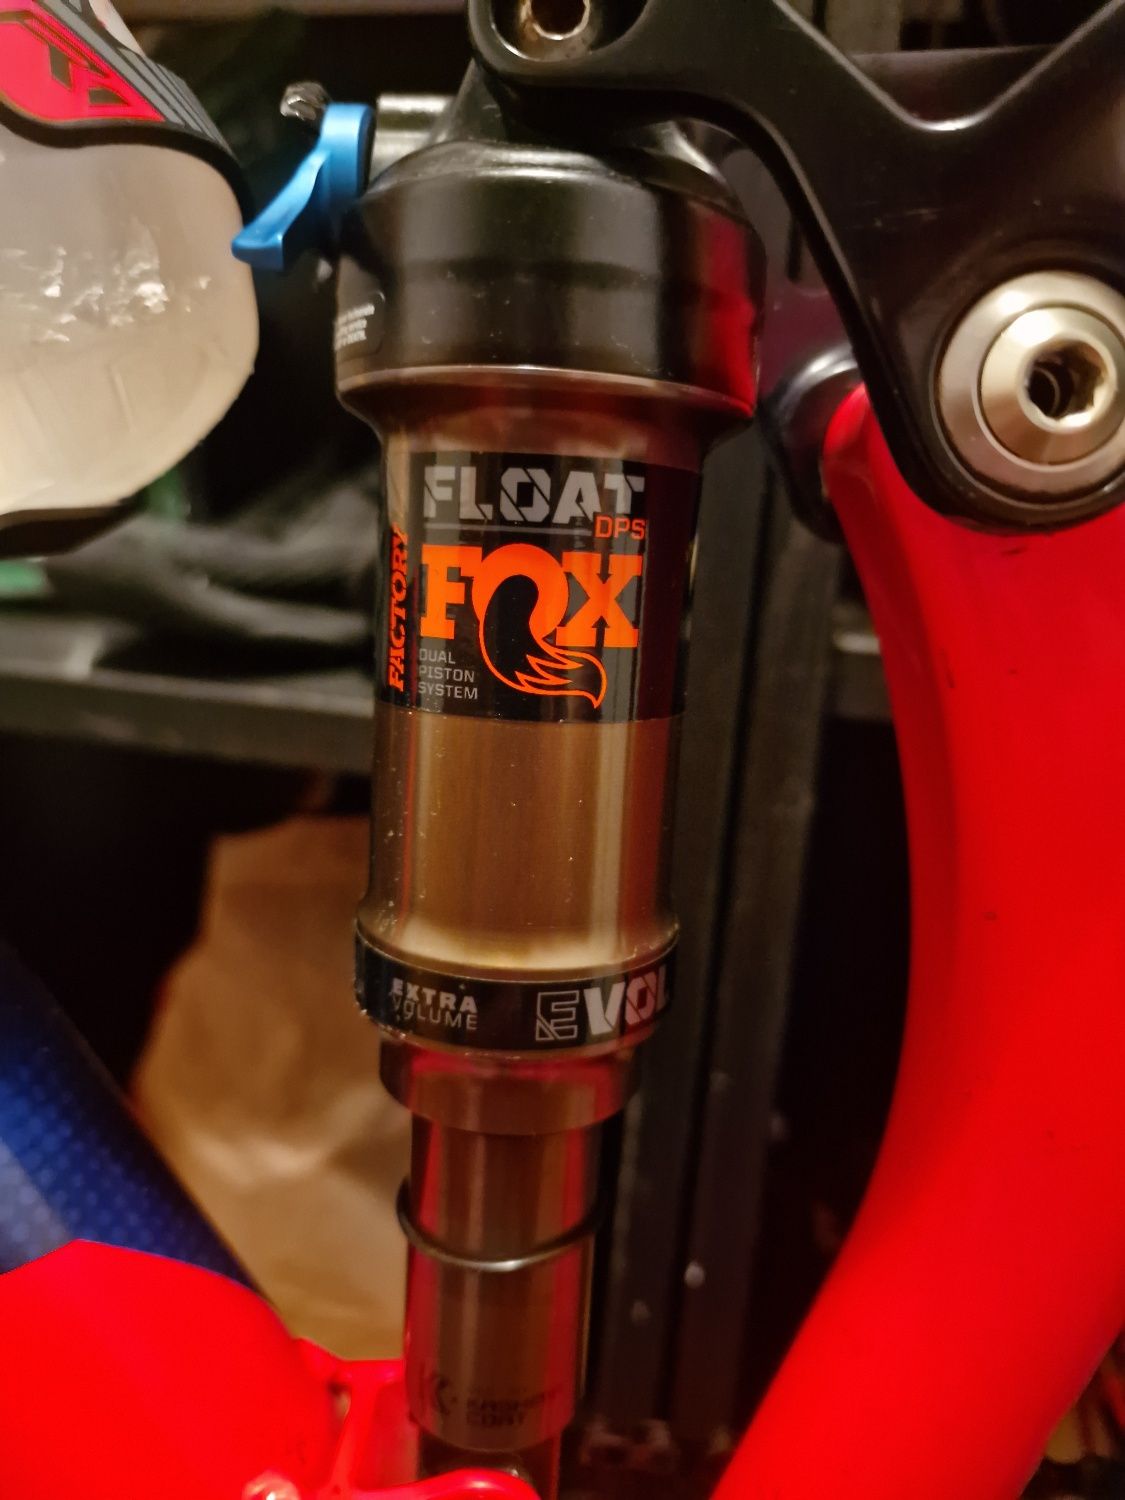 Shock fox float dps 190x45